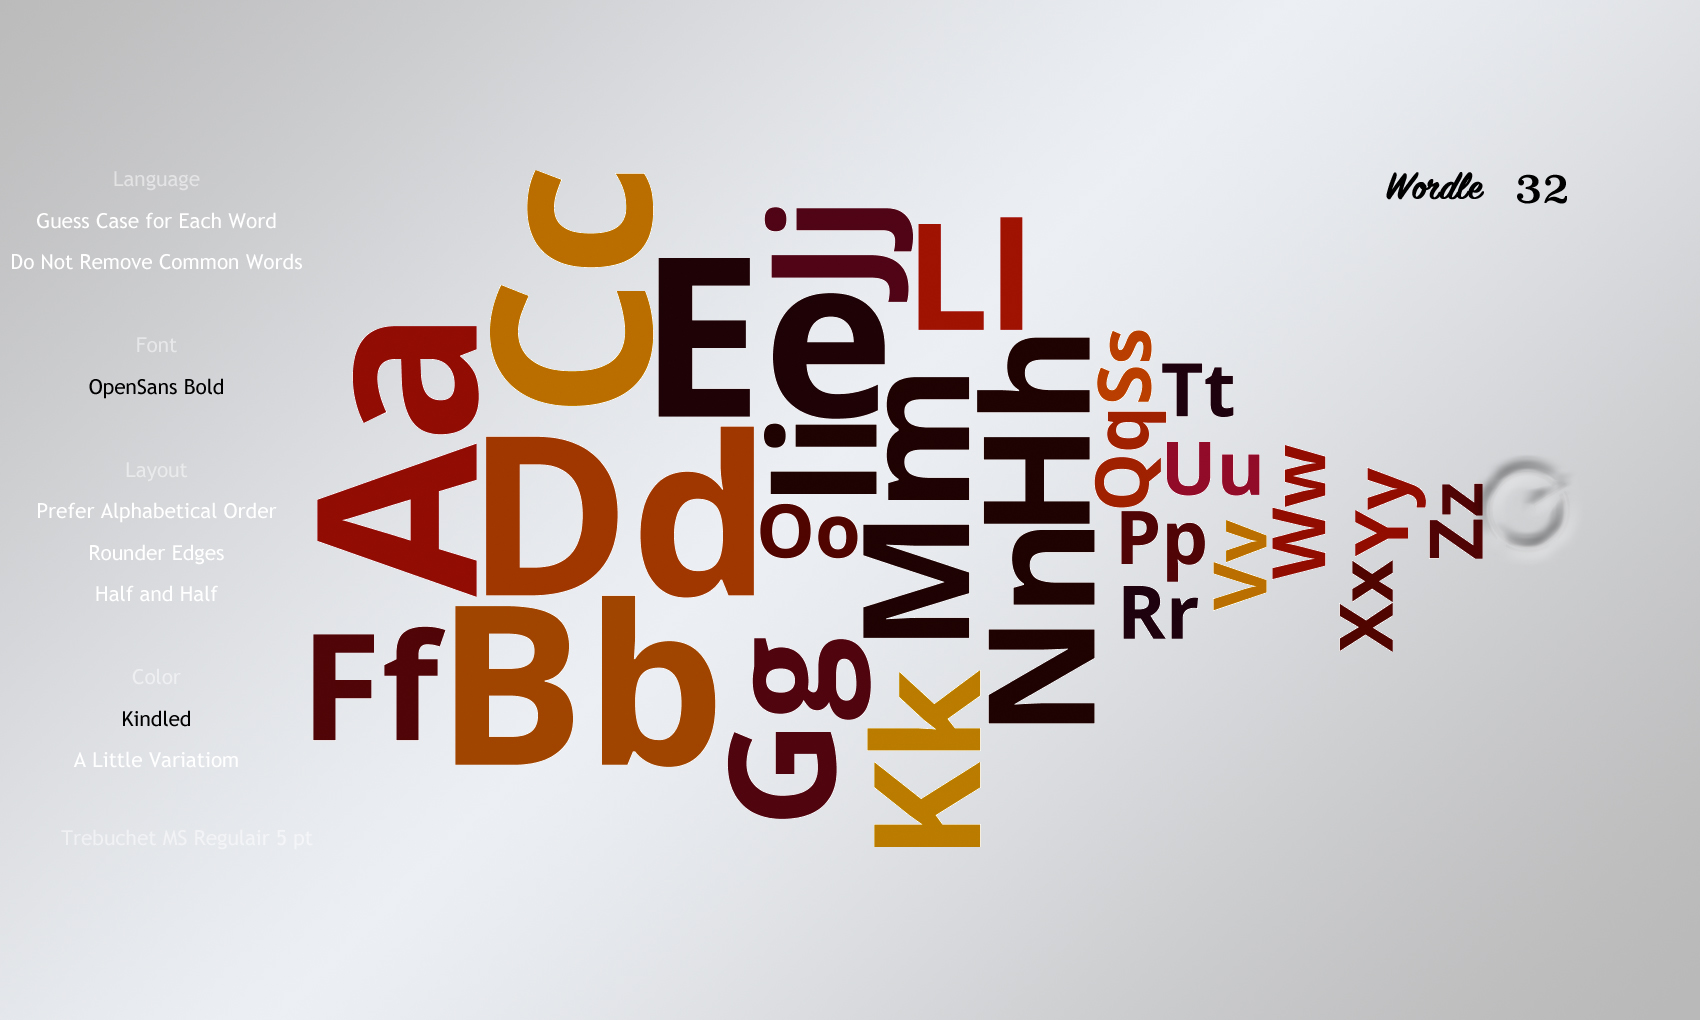 Wordle 32 OpenSans Bold